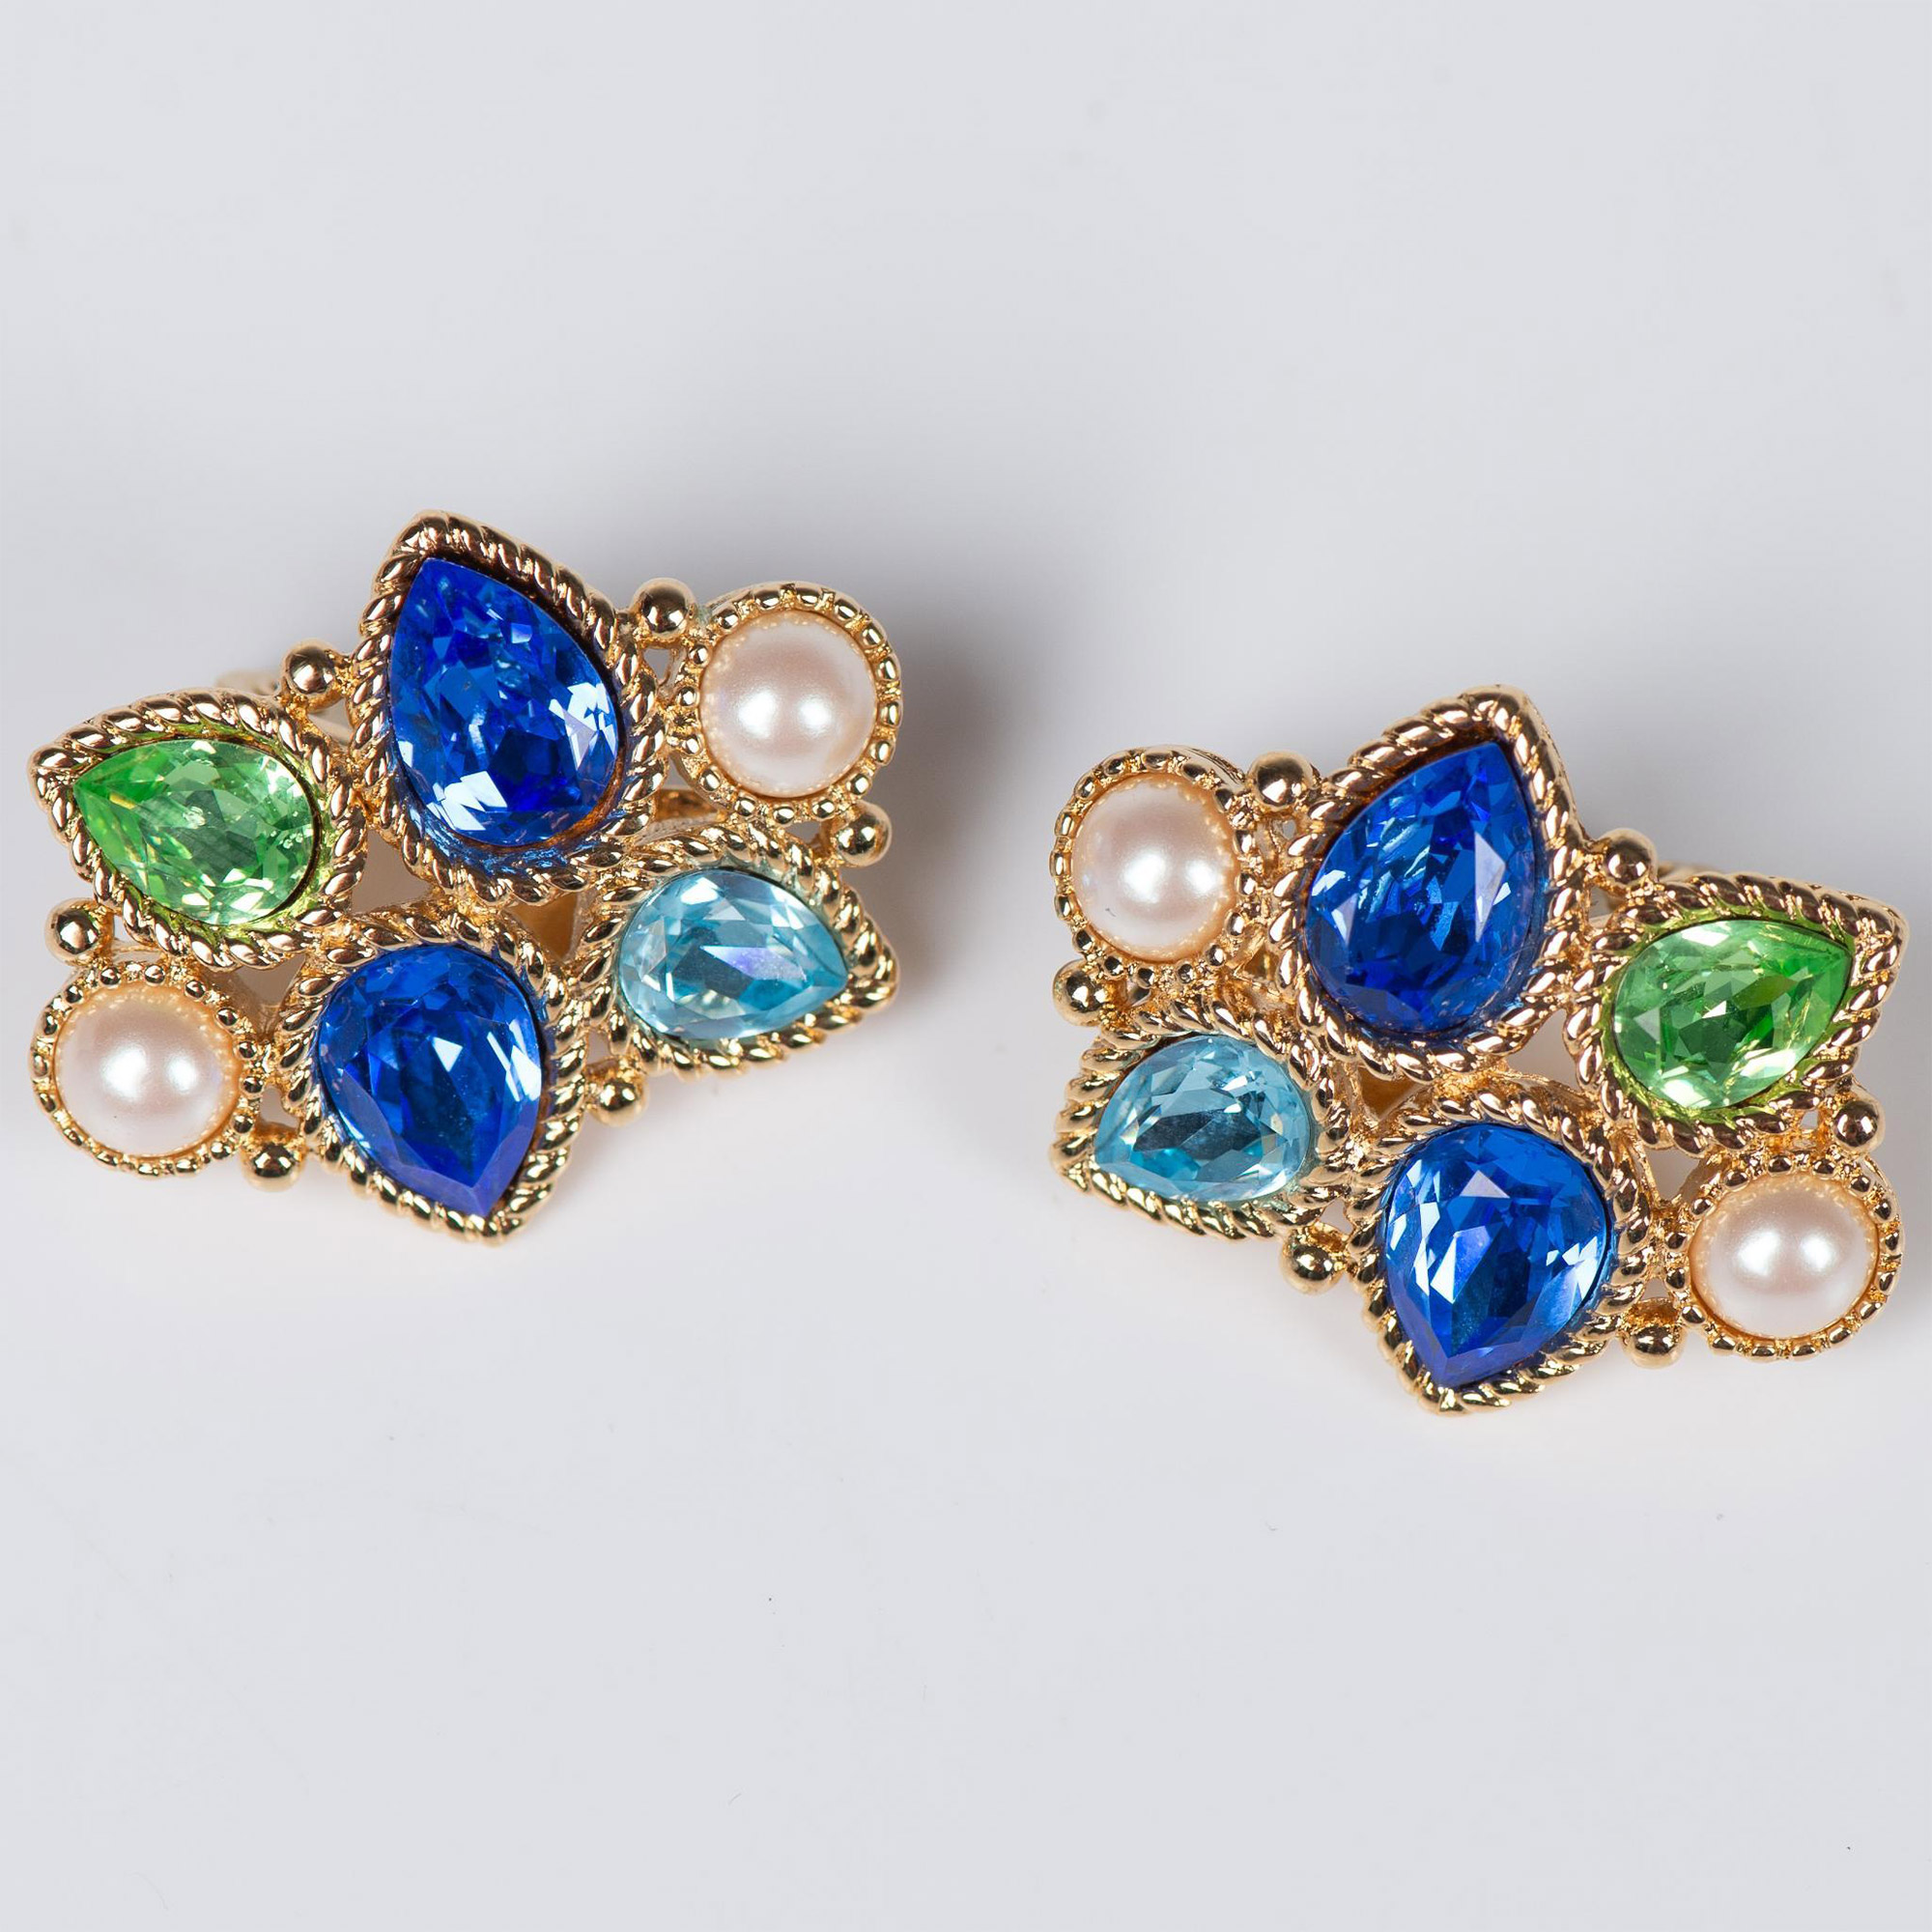 4pc Monet Rhinestone Brooch, Earrings and Bracelet - Image 3 of 5